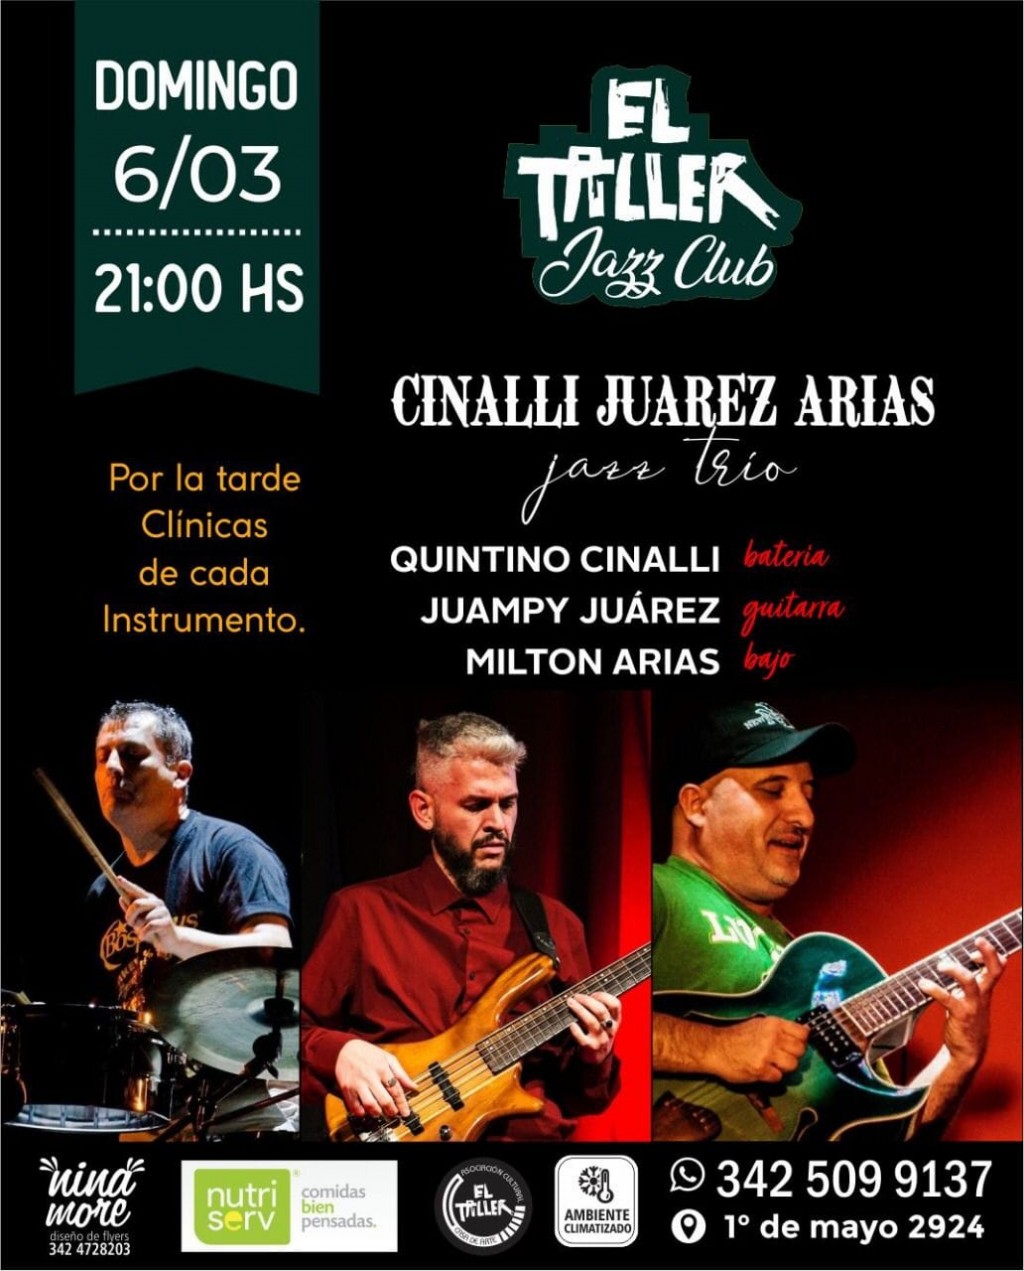 6/03 - Domingo de Jazz en El Taller